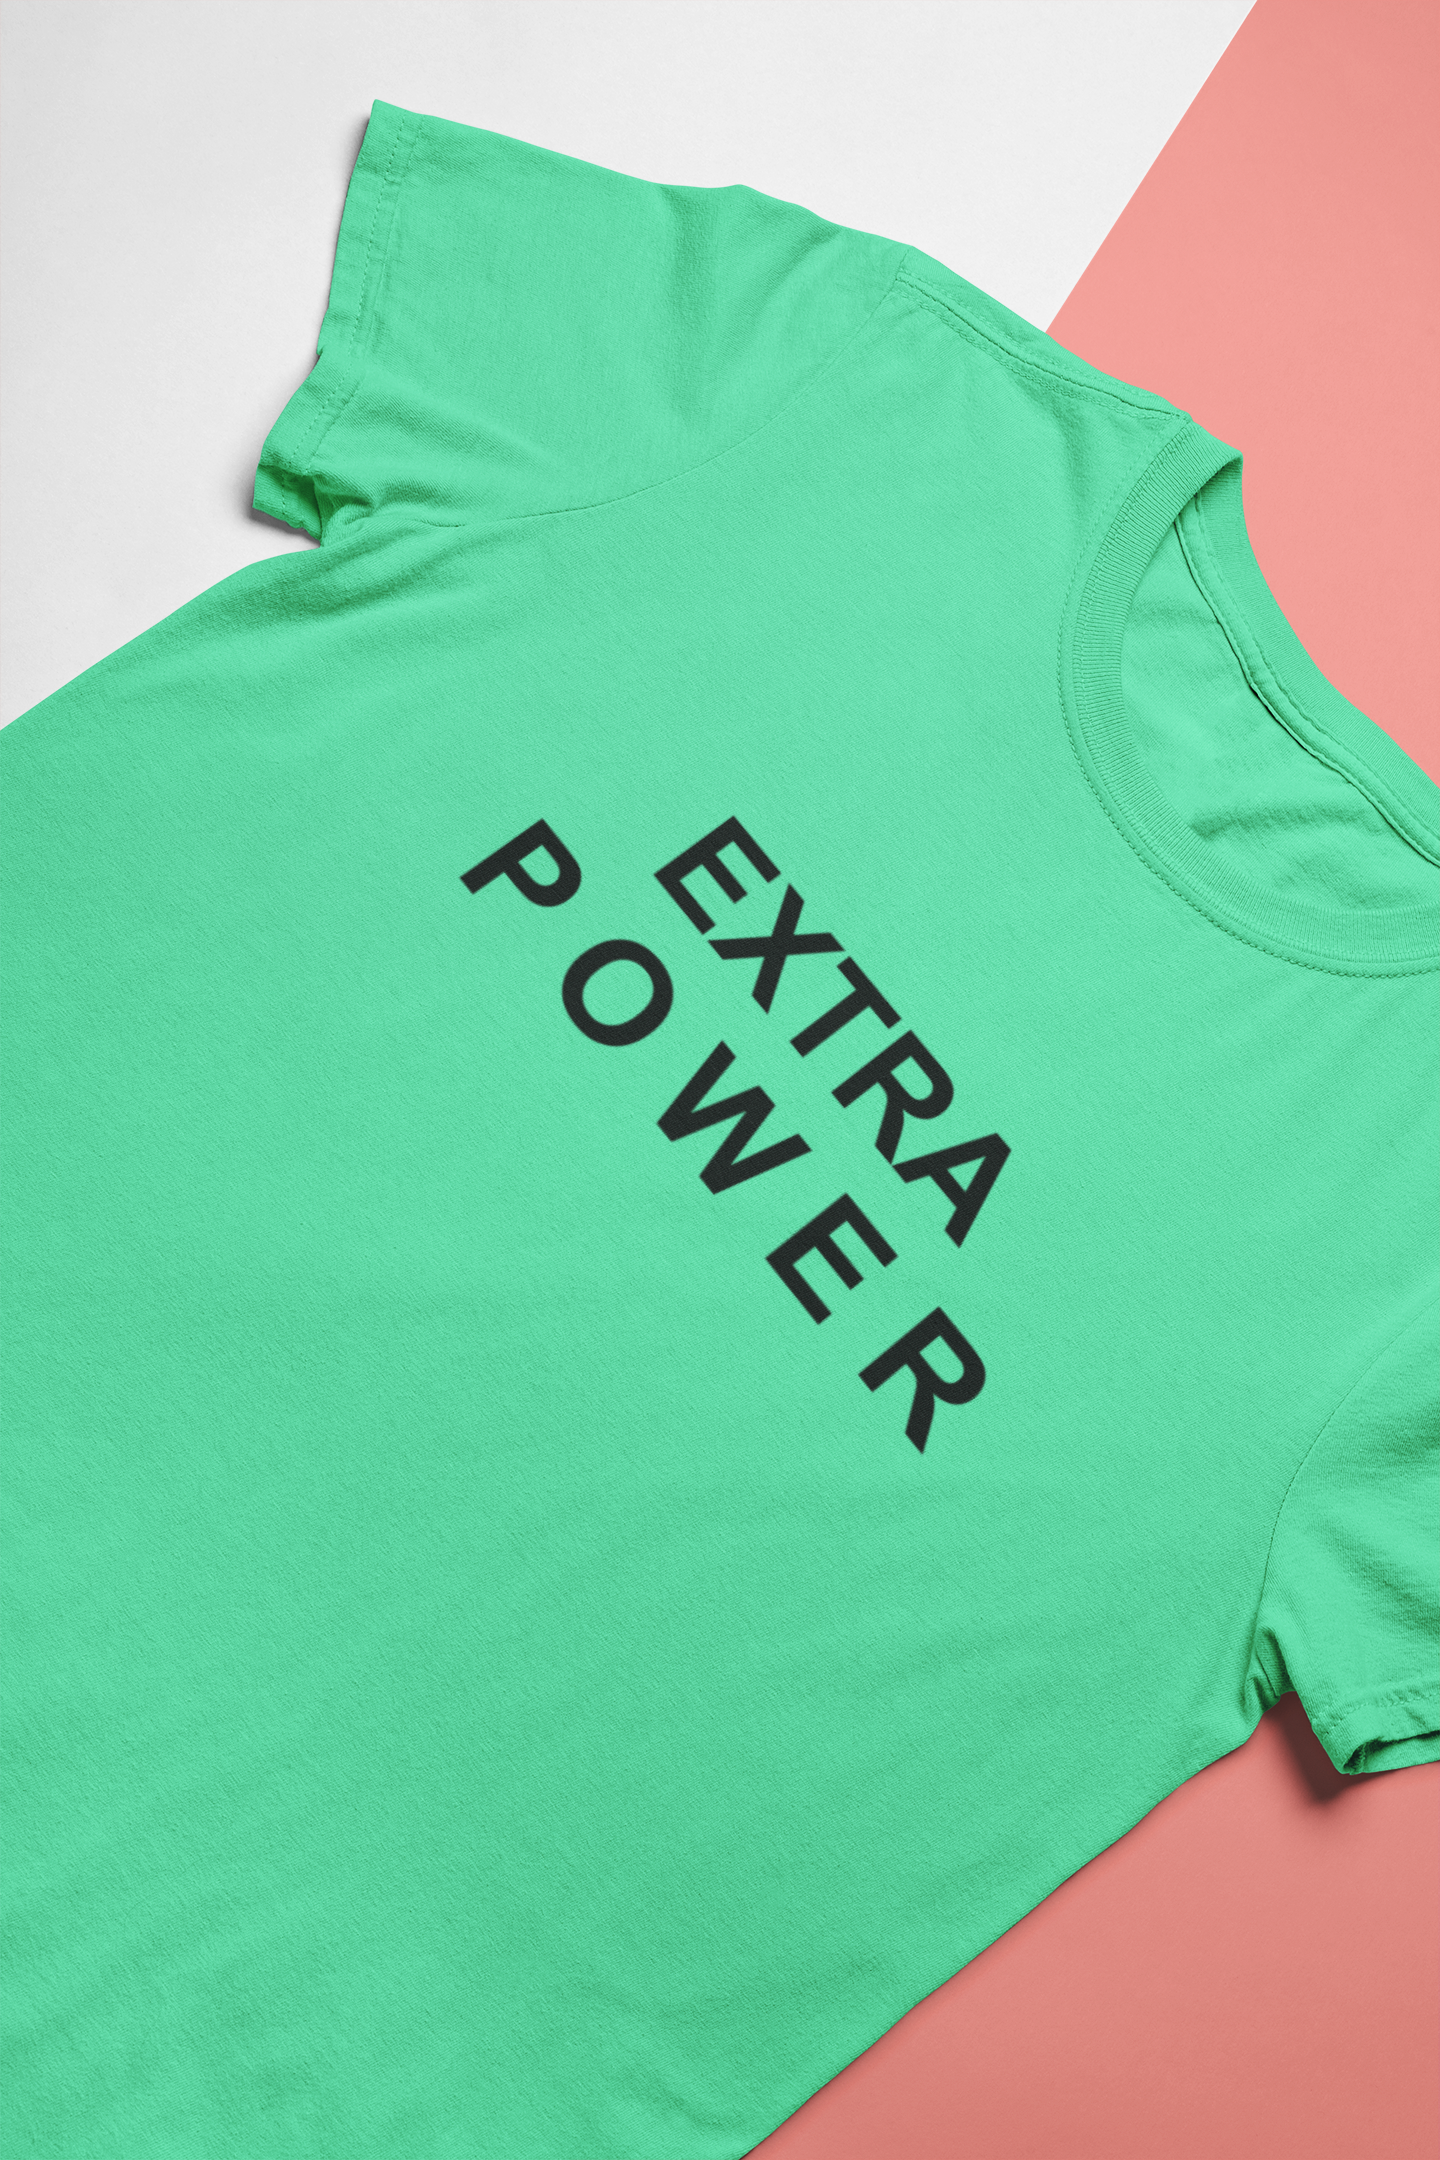 Extra Power Parineeti Chopra Celebrity T-shirt- FunkyTeesClub